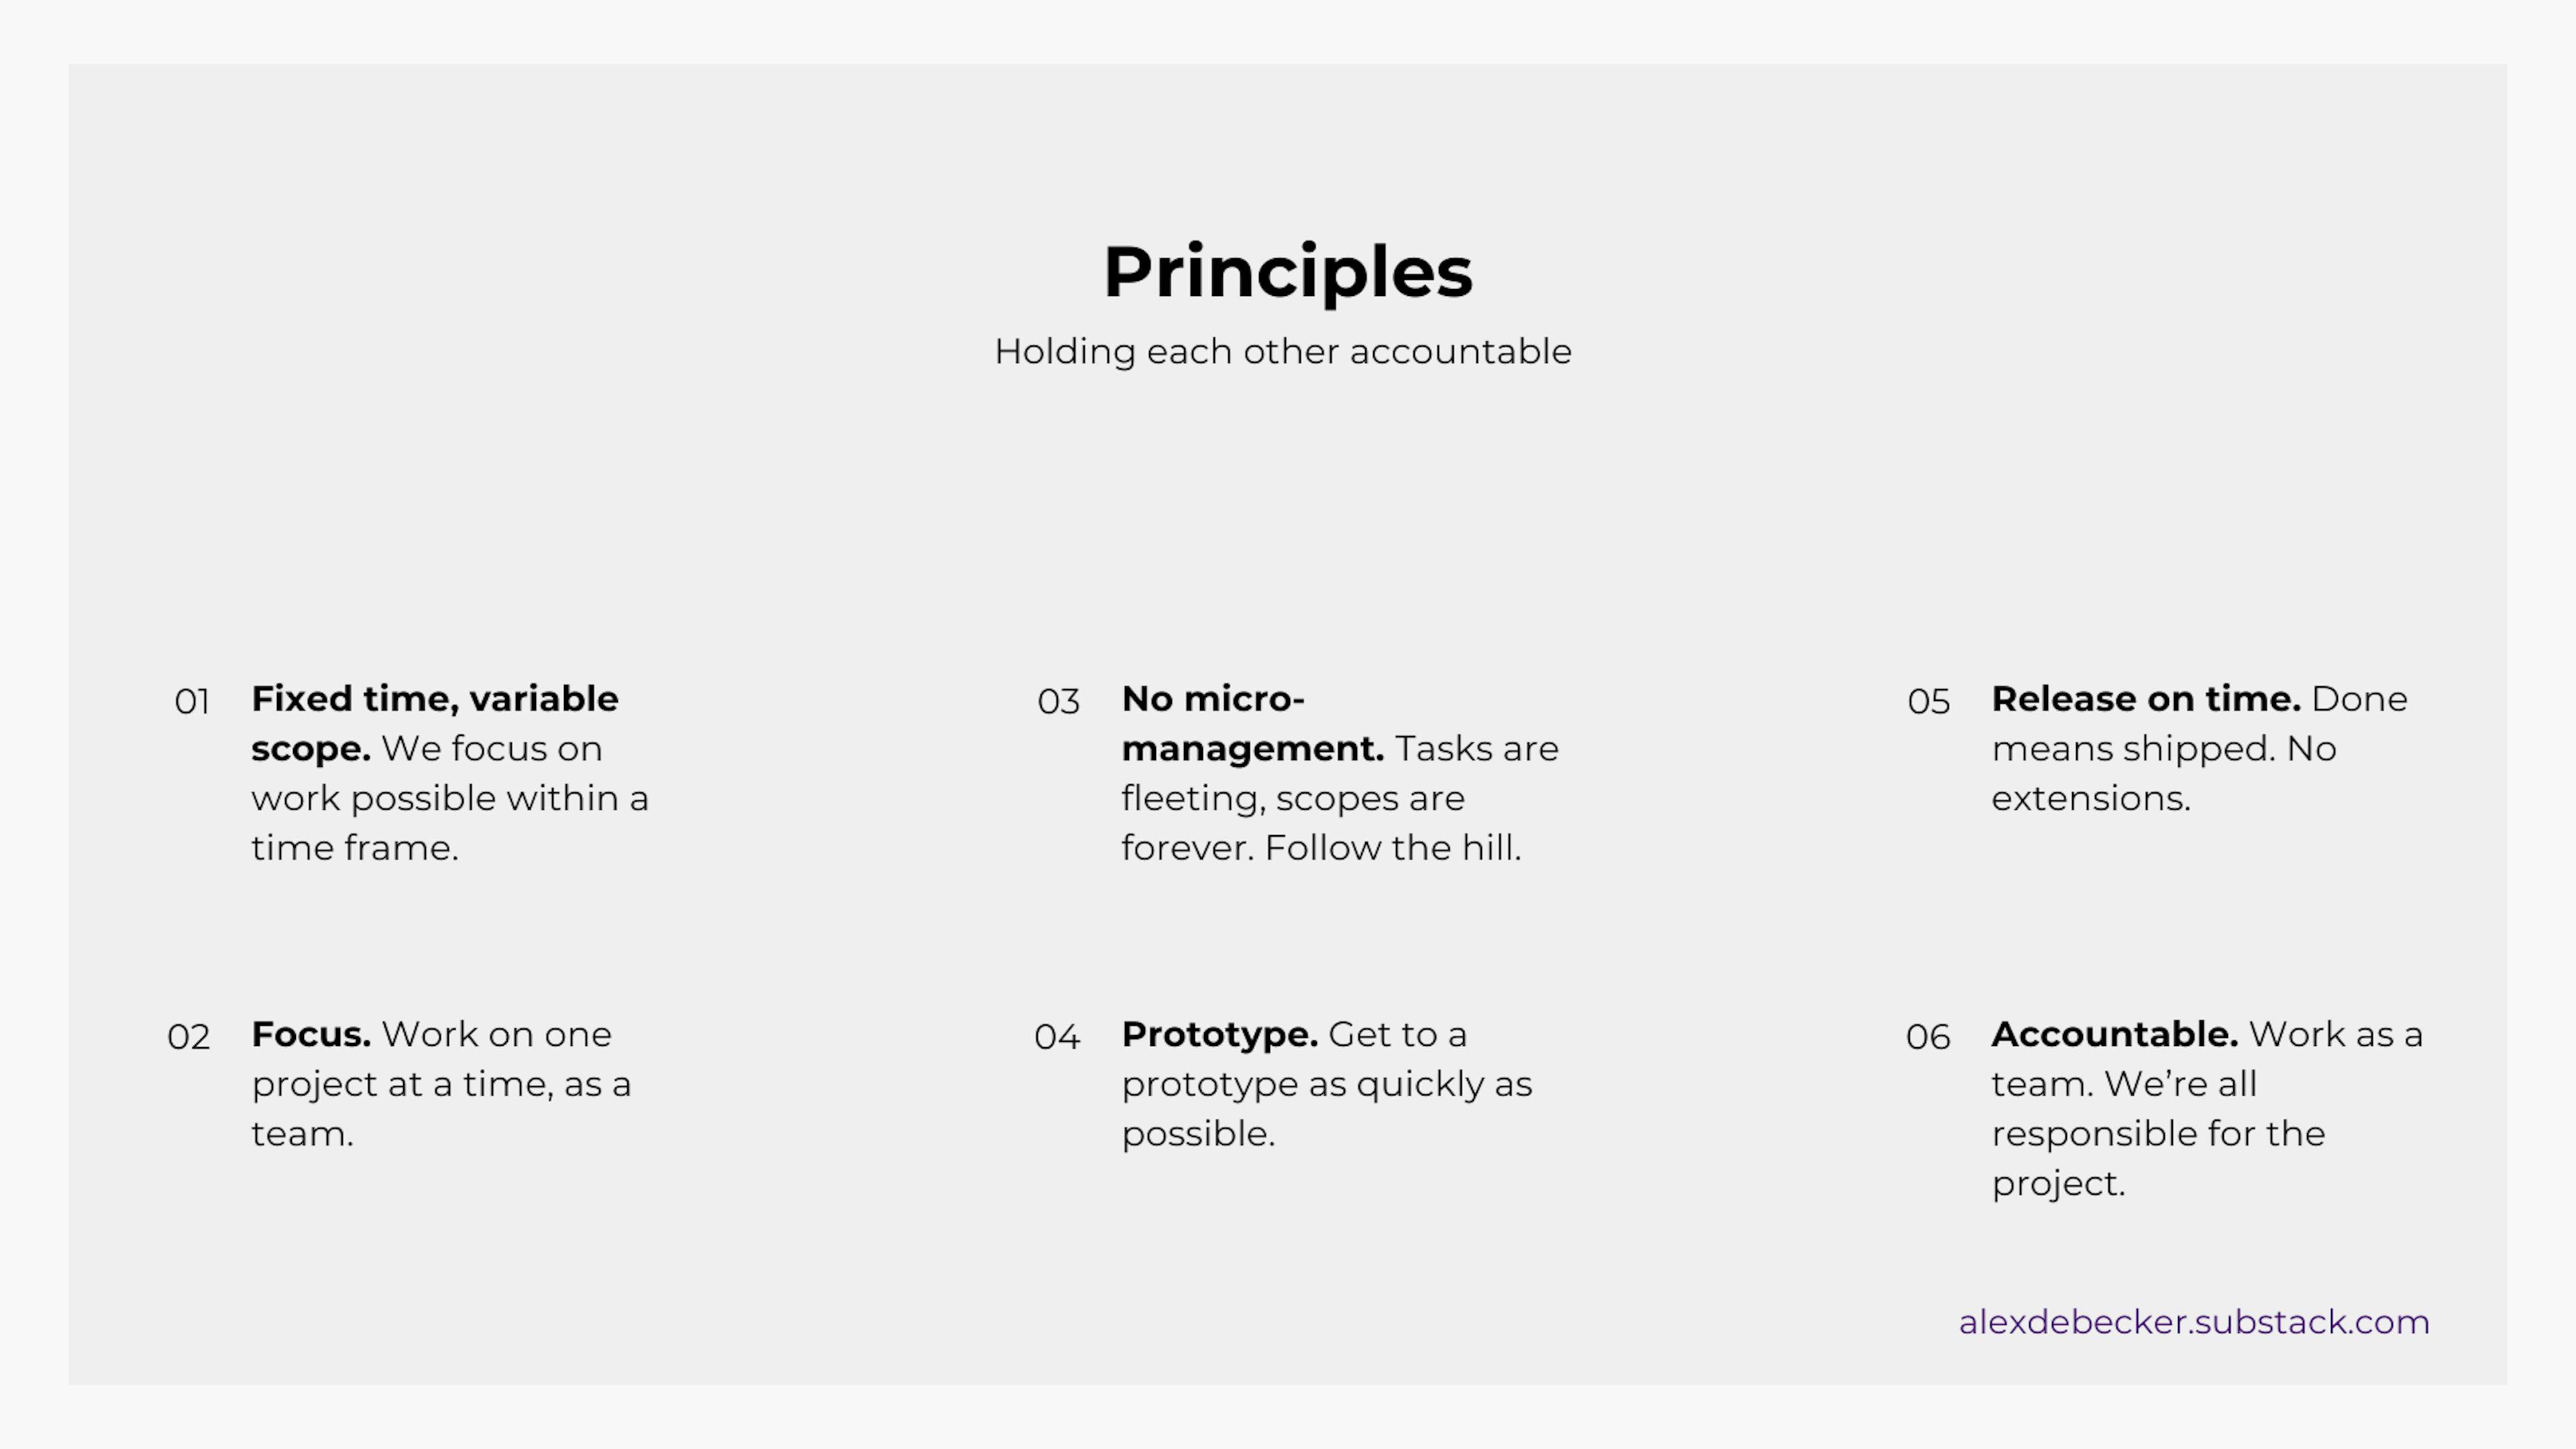 Slide 12 of my internal pitch deck: Principles